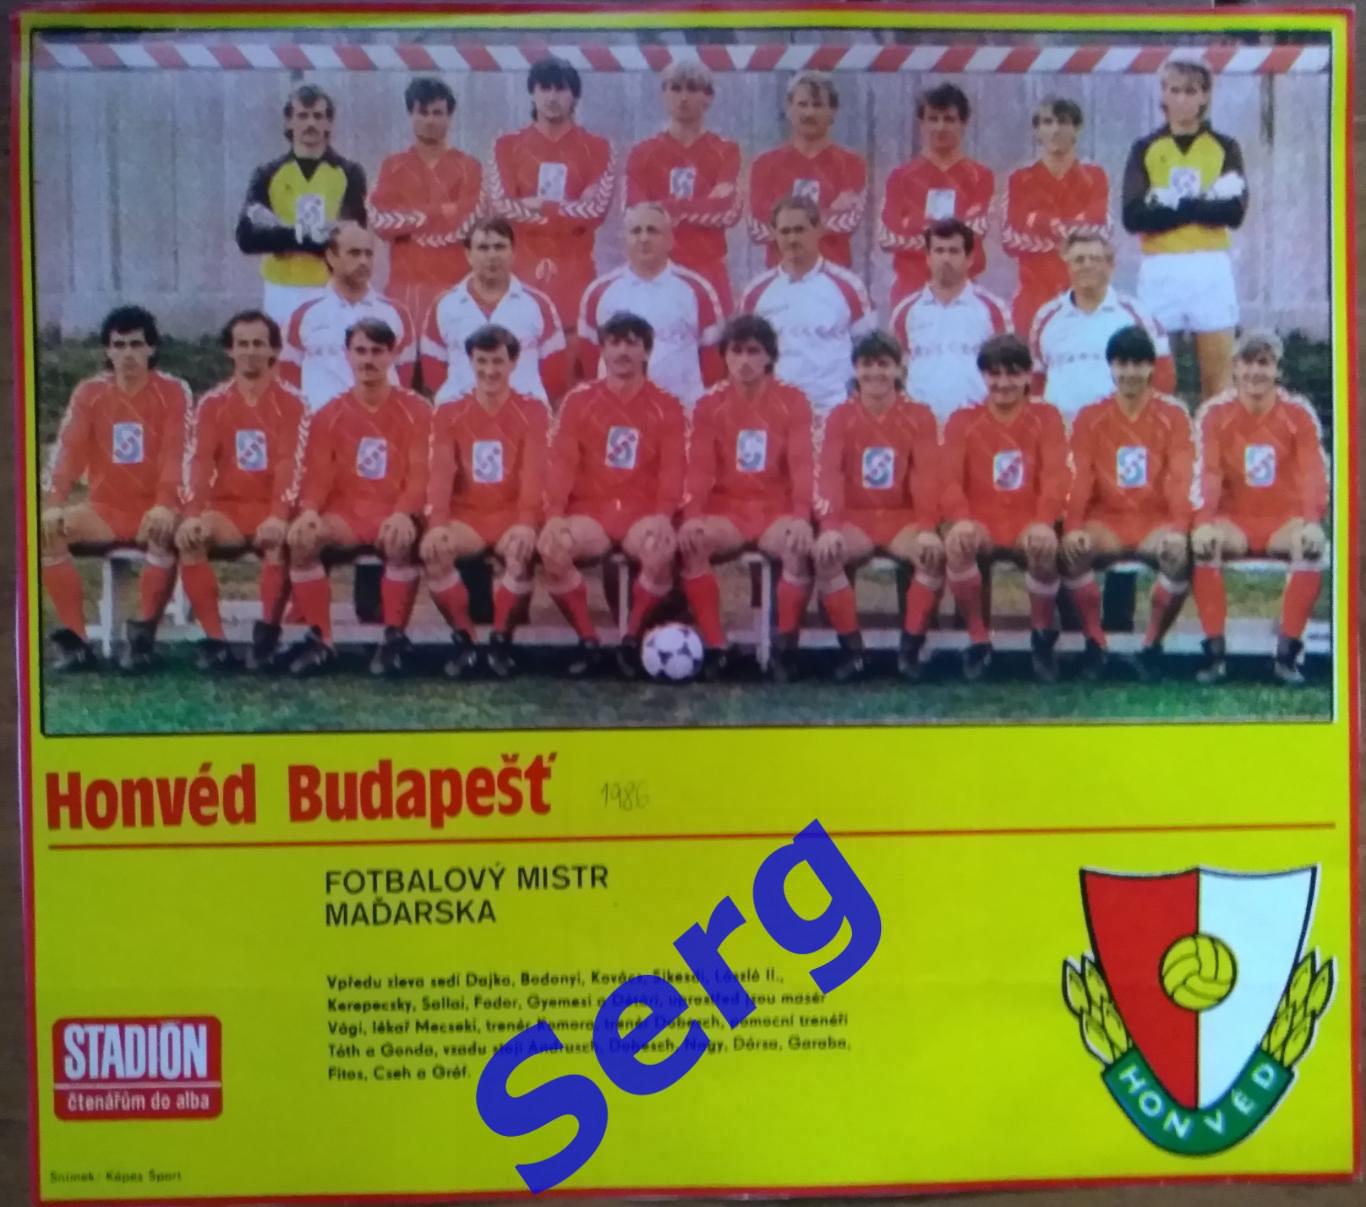 Постер Гонвед Будапешт, Венгрия из журнала Стадион/Stadion 1986 год